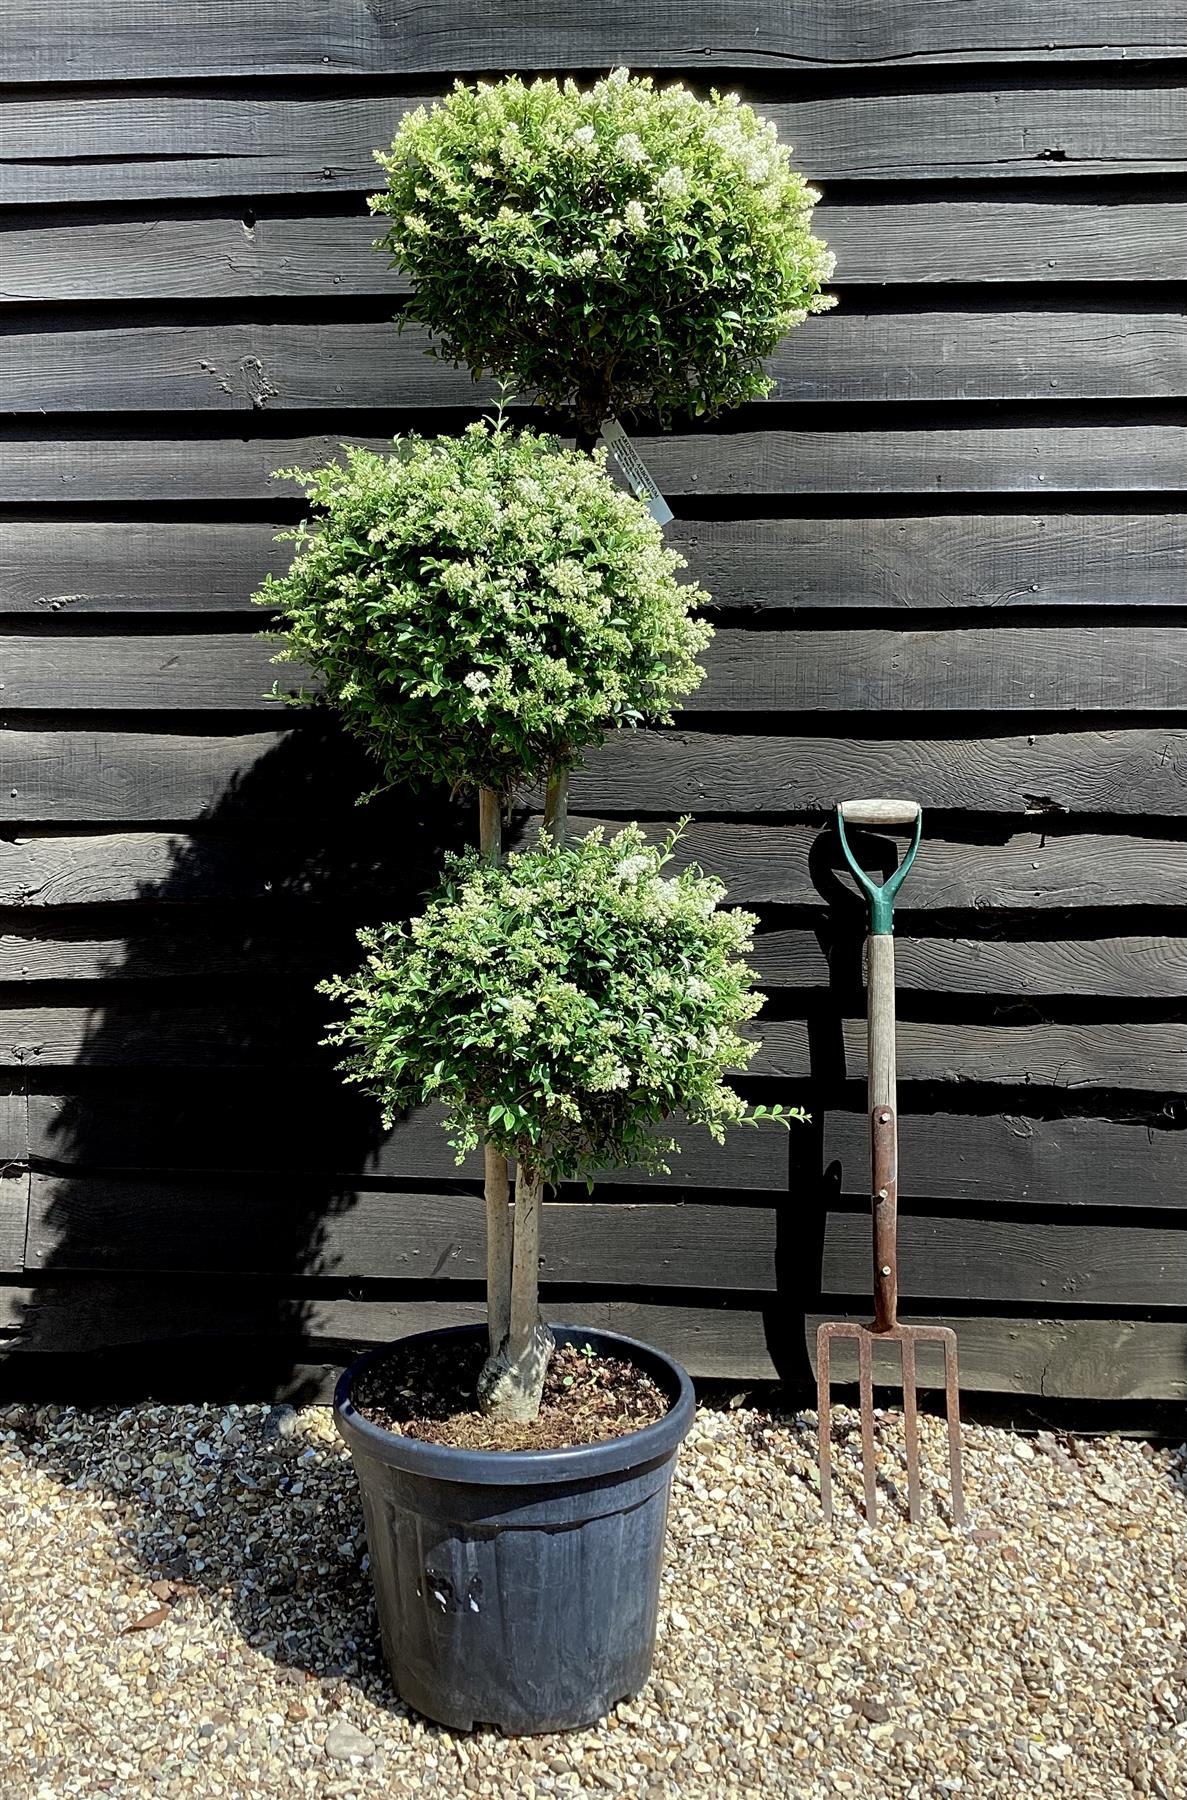 Ligustrum jonandrum | Delavay Privet Topiary Tree Multi Ball - 180-190cm, 35lt